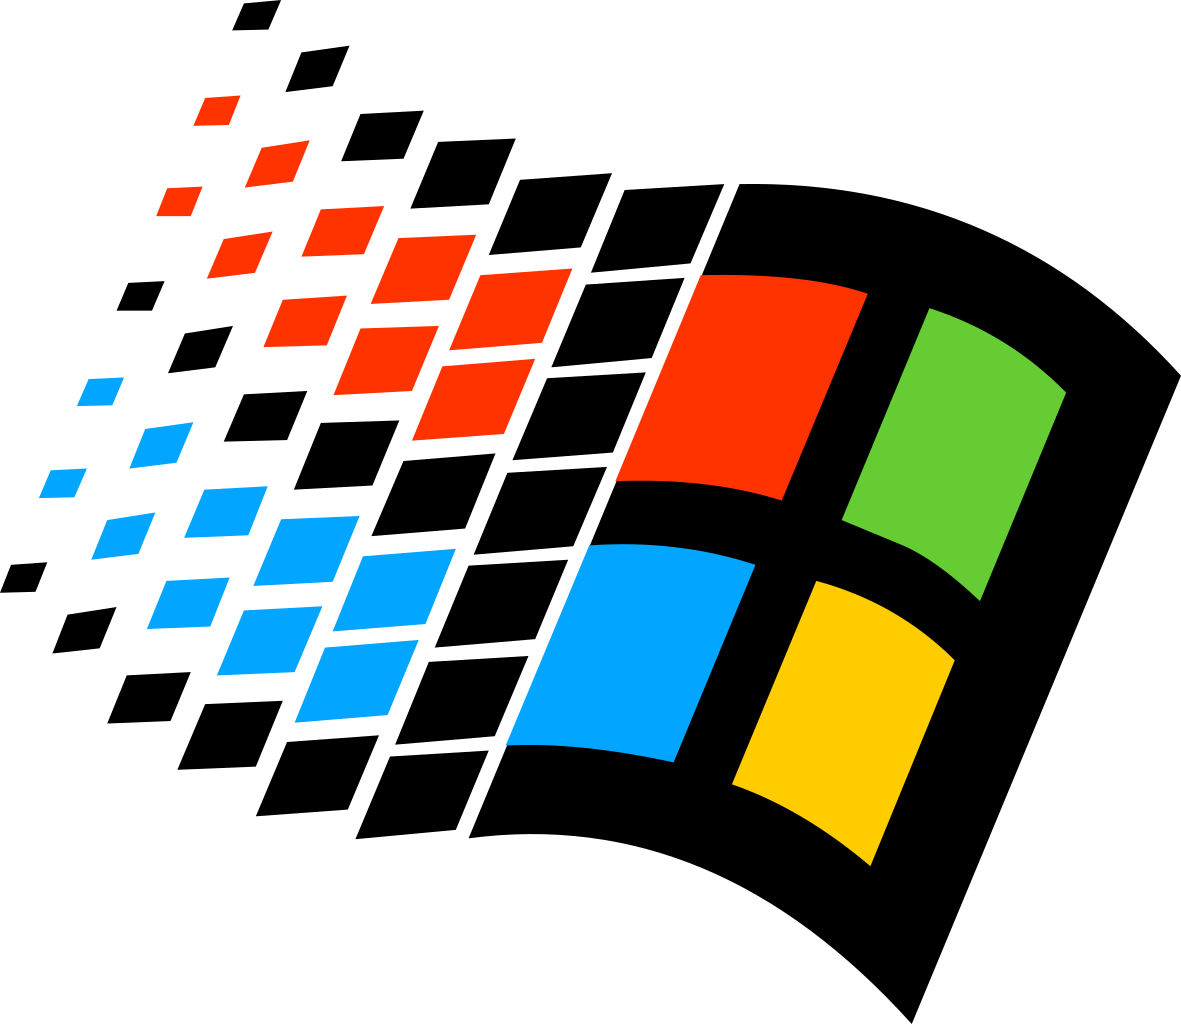 Windows Logo PNG Image in Transparent